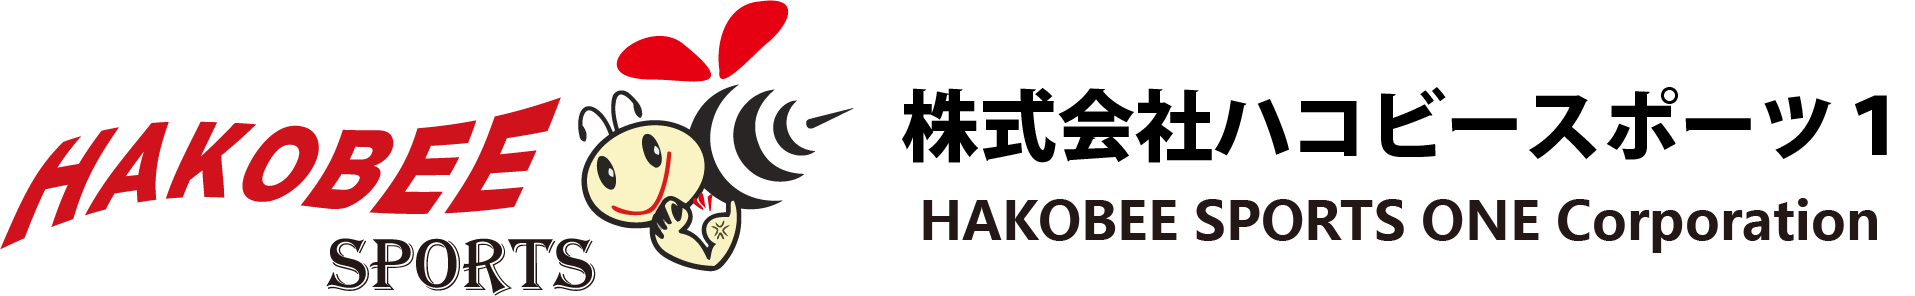 株式会社 HAKOBEE SPORTS